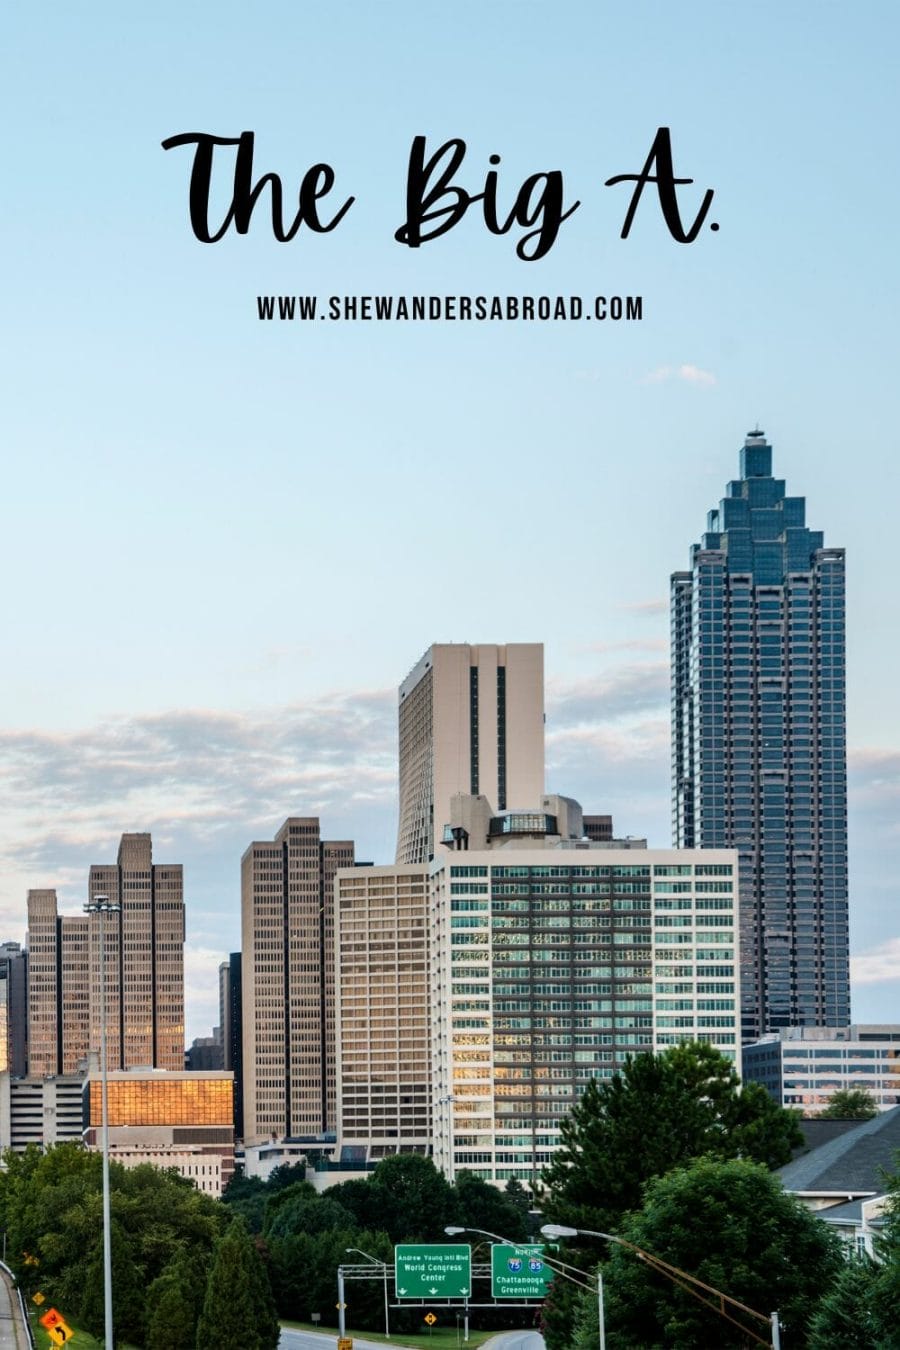 Famous Sayings About Atlanta